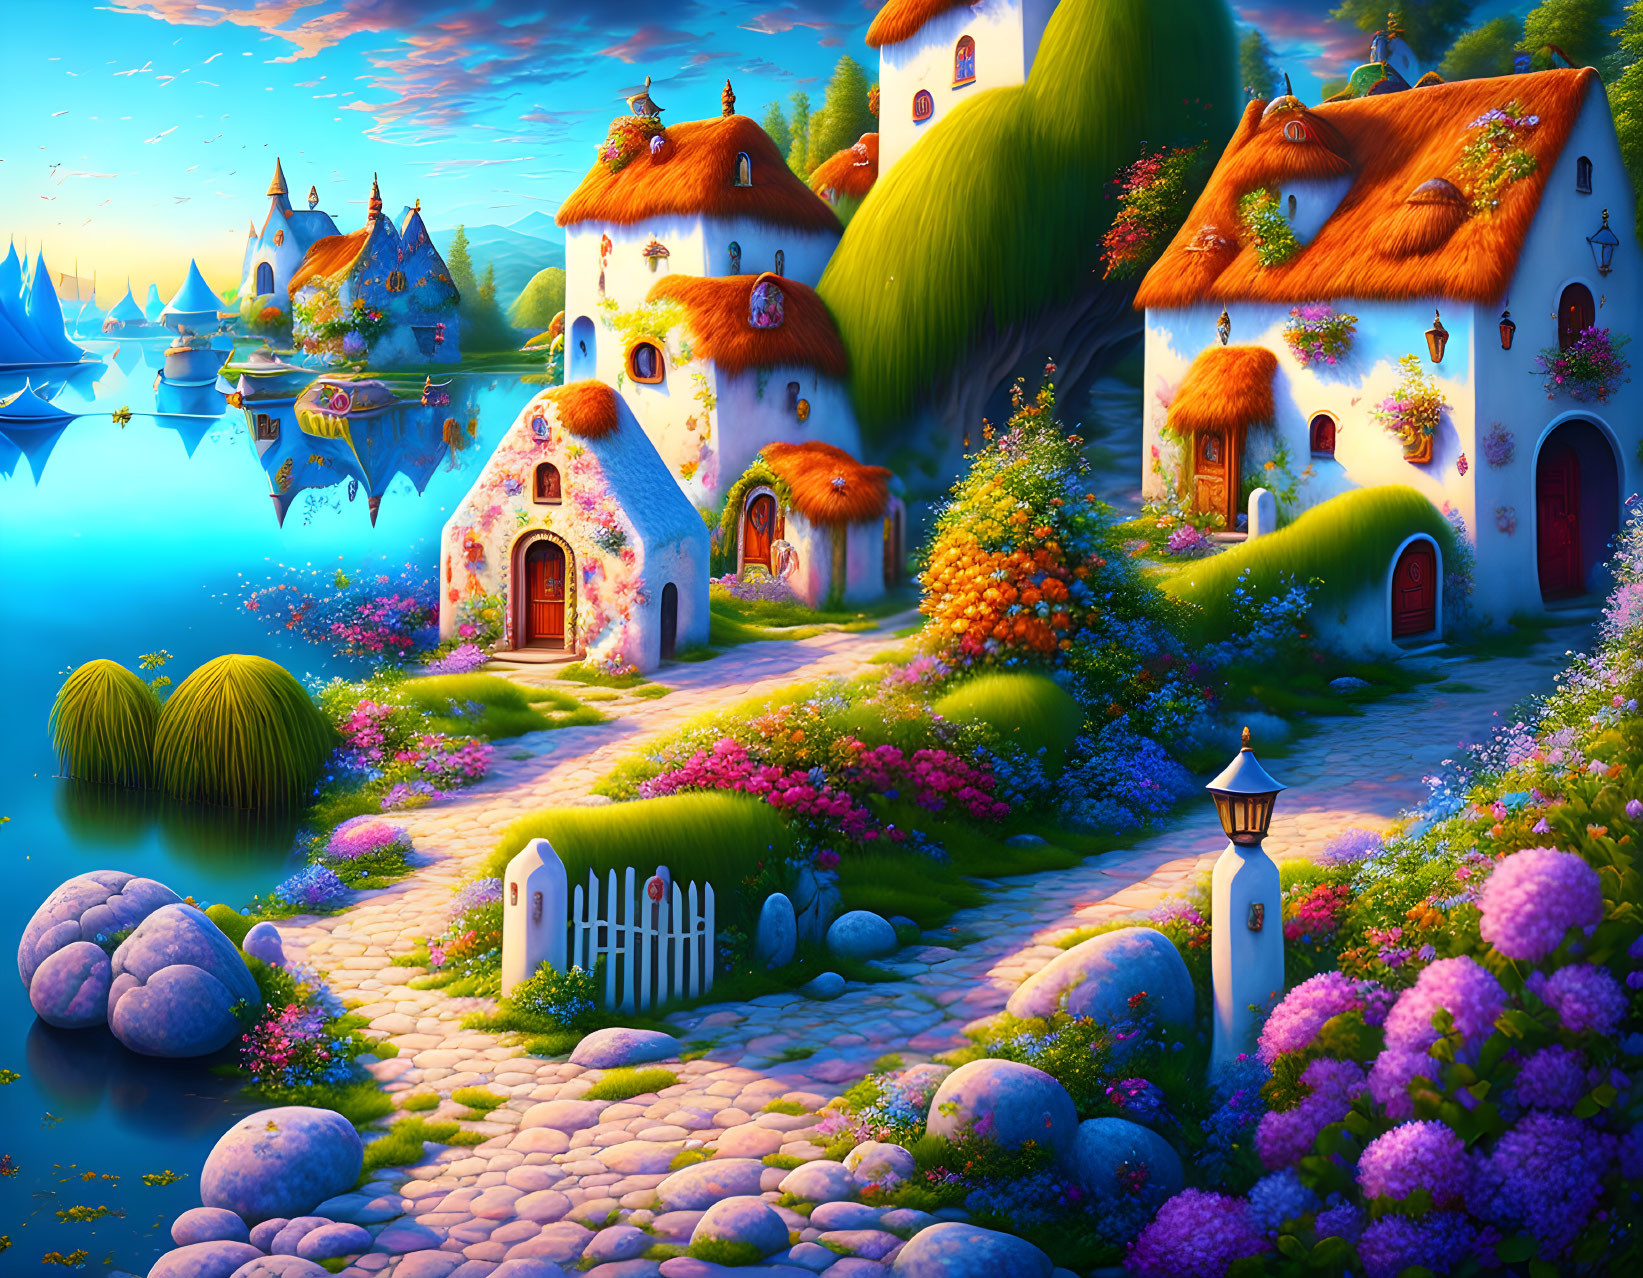 Fairytale village